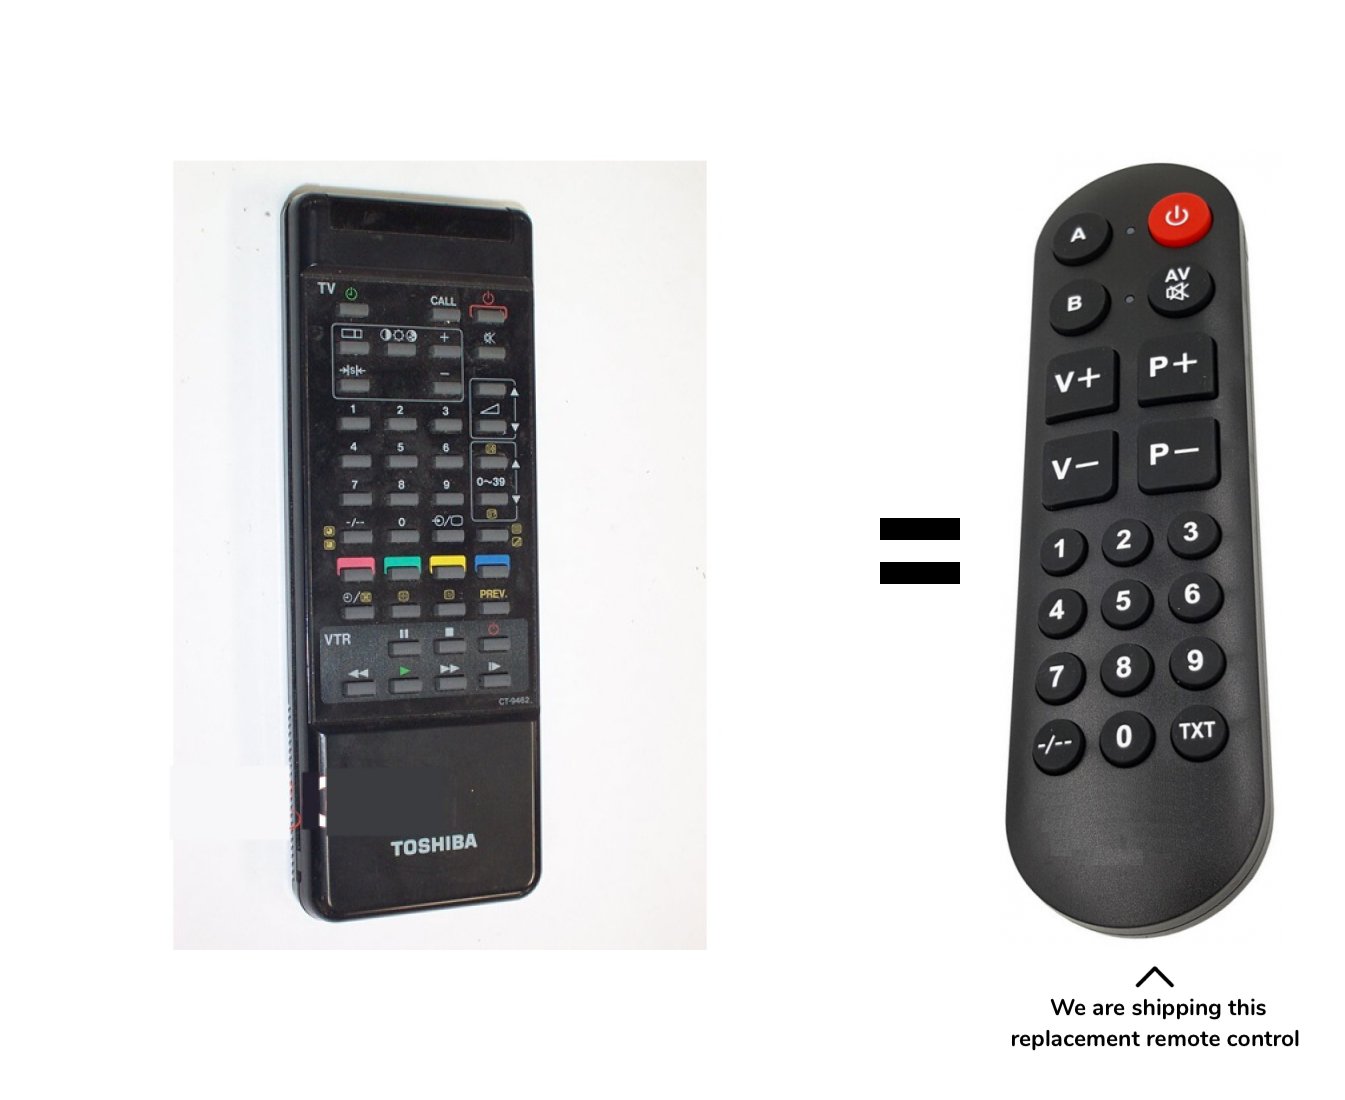 Toshiba 2100TTT–21 remote control for seniors